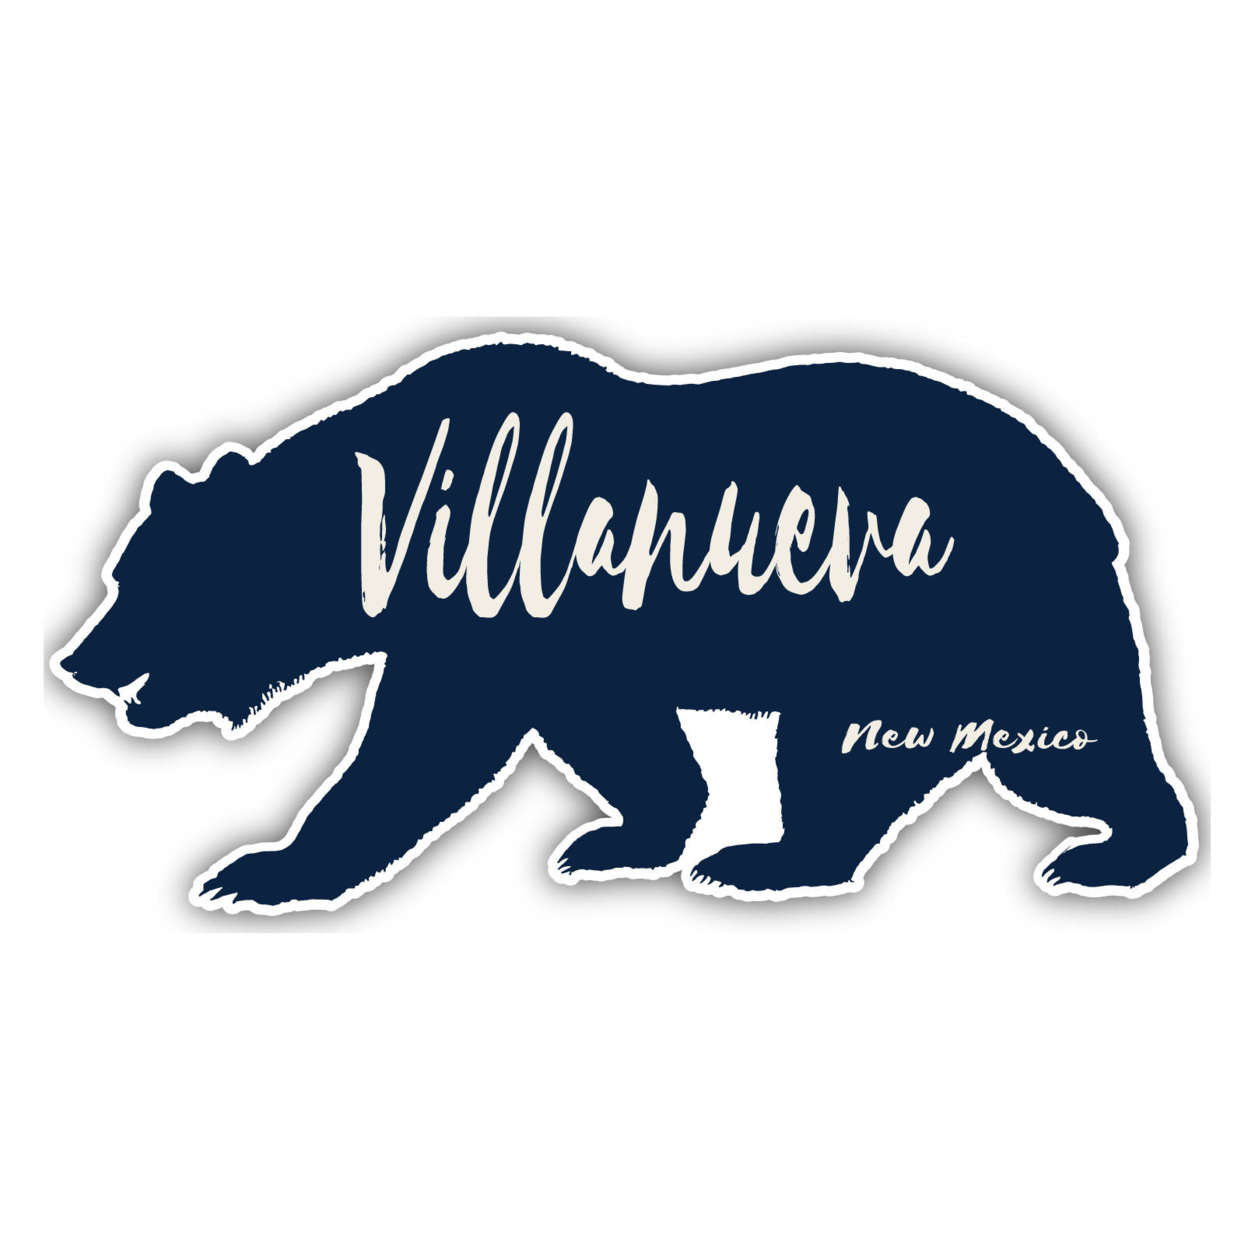 Villanueva New Mexico Souvenir Decorative Stickers (Choose Theme And Size) - Single Unit, 2-Inch, Bear